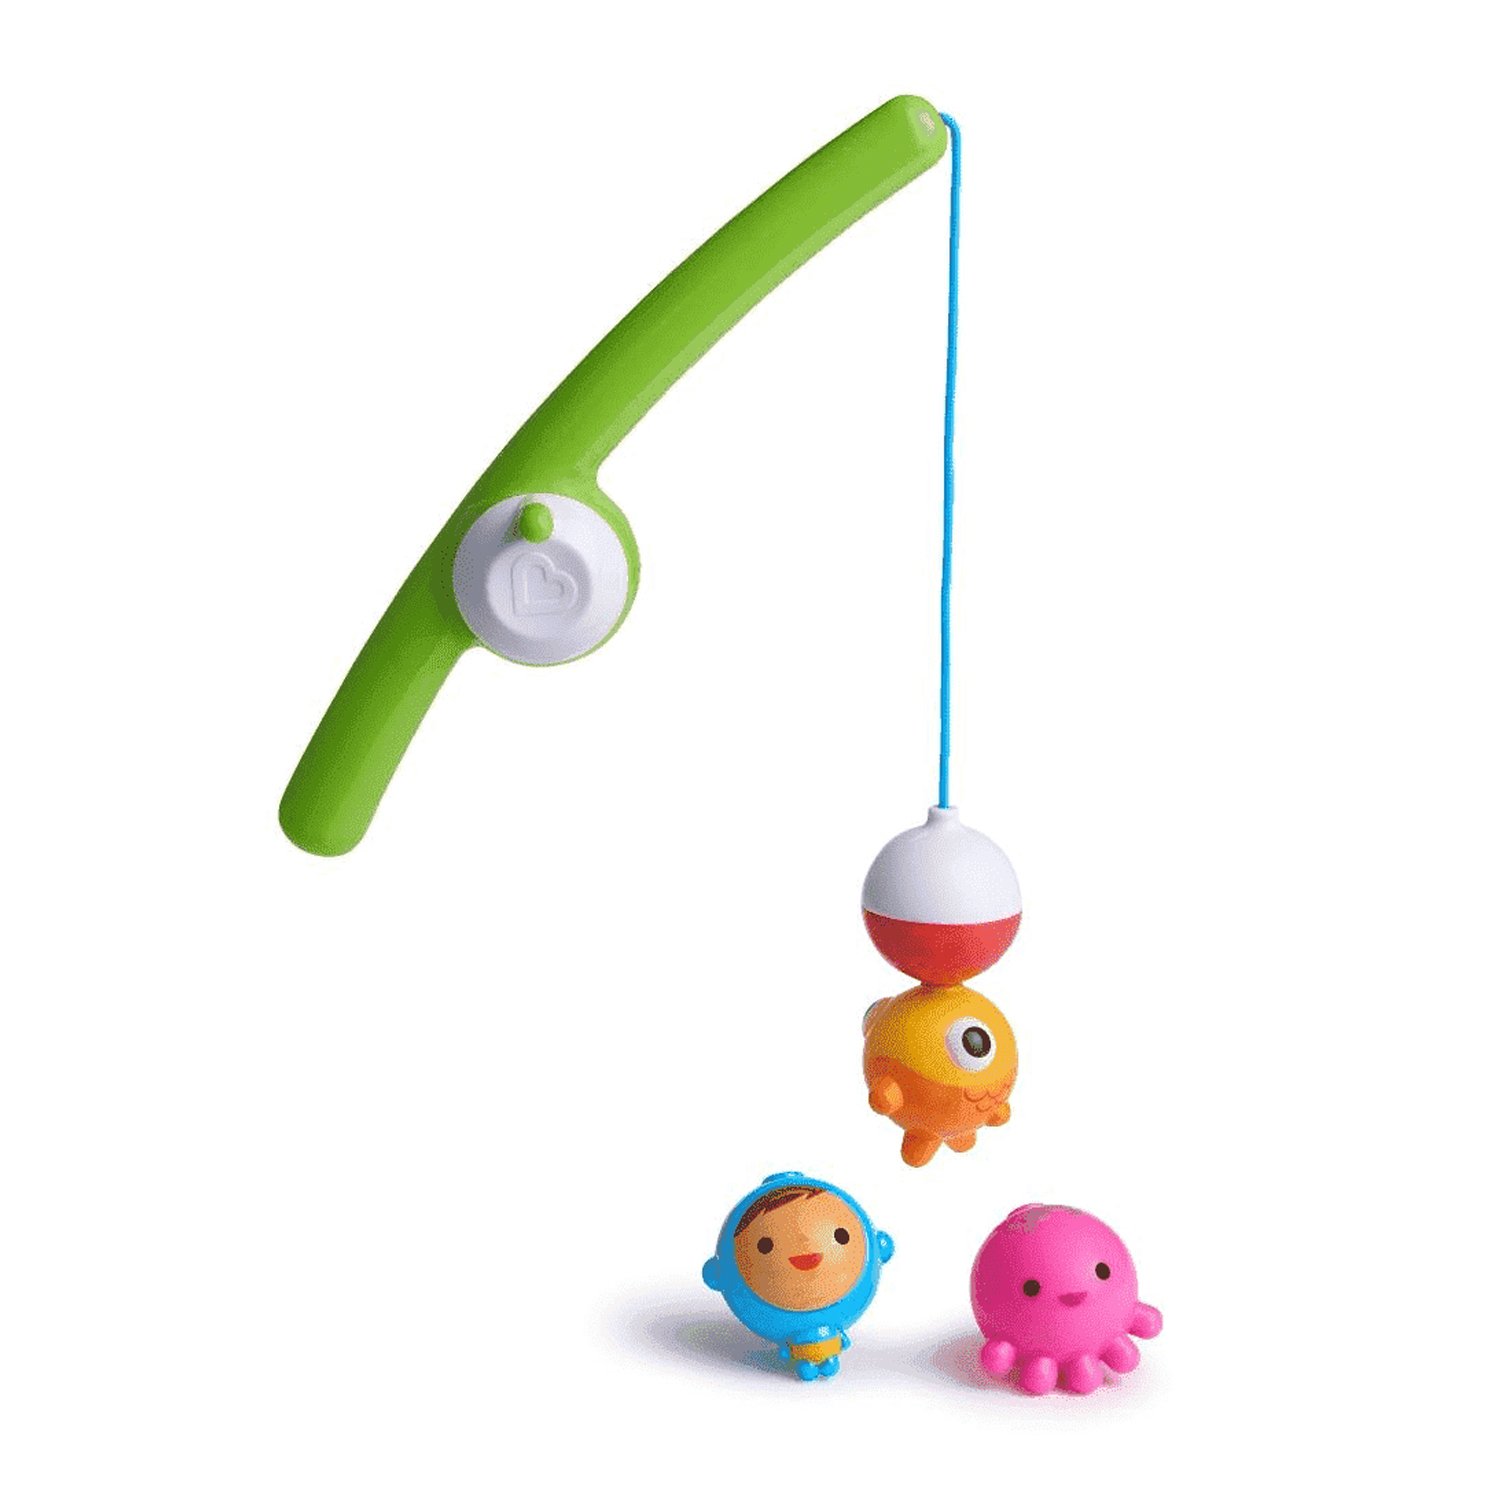 Munchkin игрушки для ванны Весёлая рыбалка Fishin’ ™, 24+